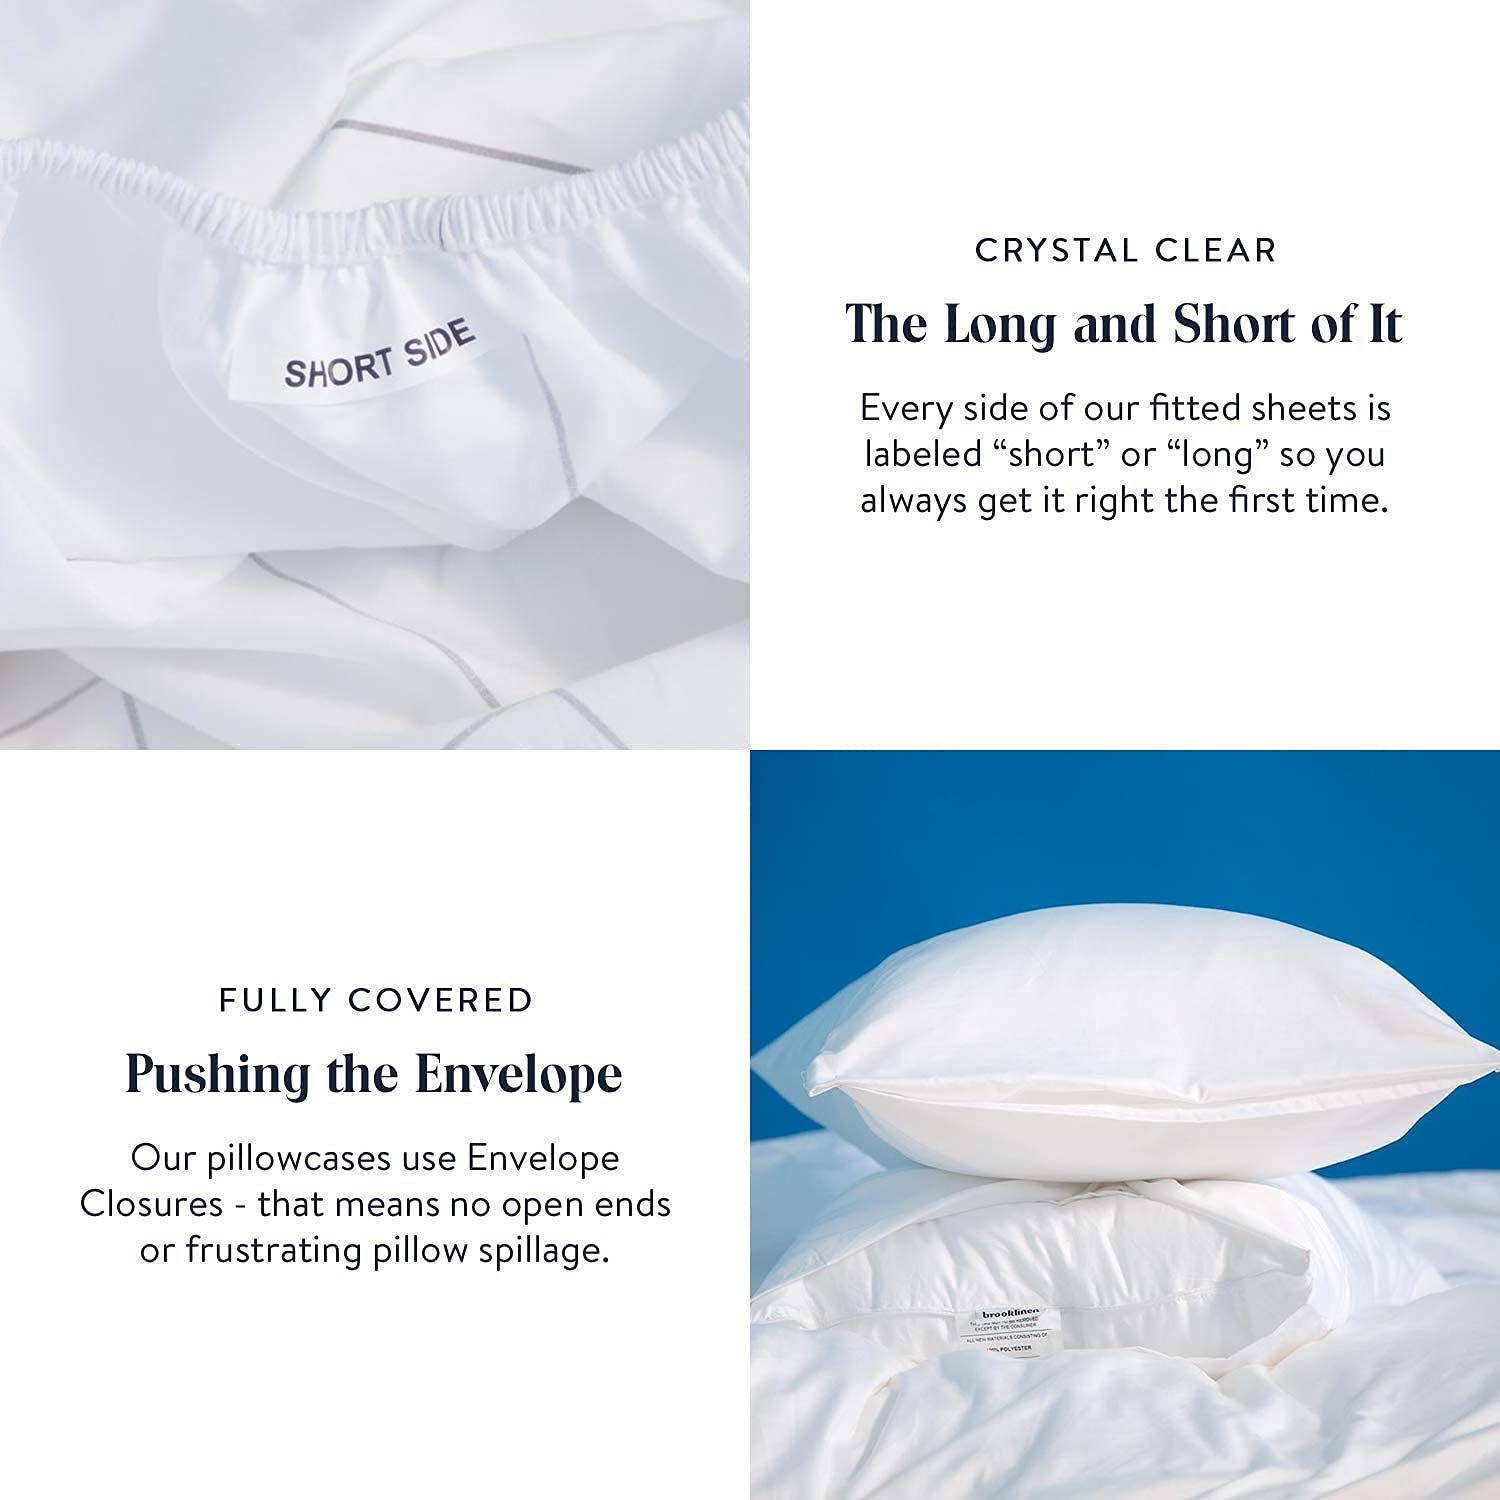 Brooklinen Luxury Sateen 4 Piece Sheet Set - 100% Cotton, Twin Size in Cream - 1 Fitted Sheet, 1 Flat Sheet, 2 Pillowcases | Best Luxury Sheets